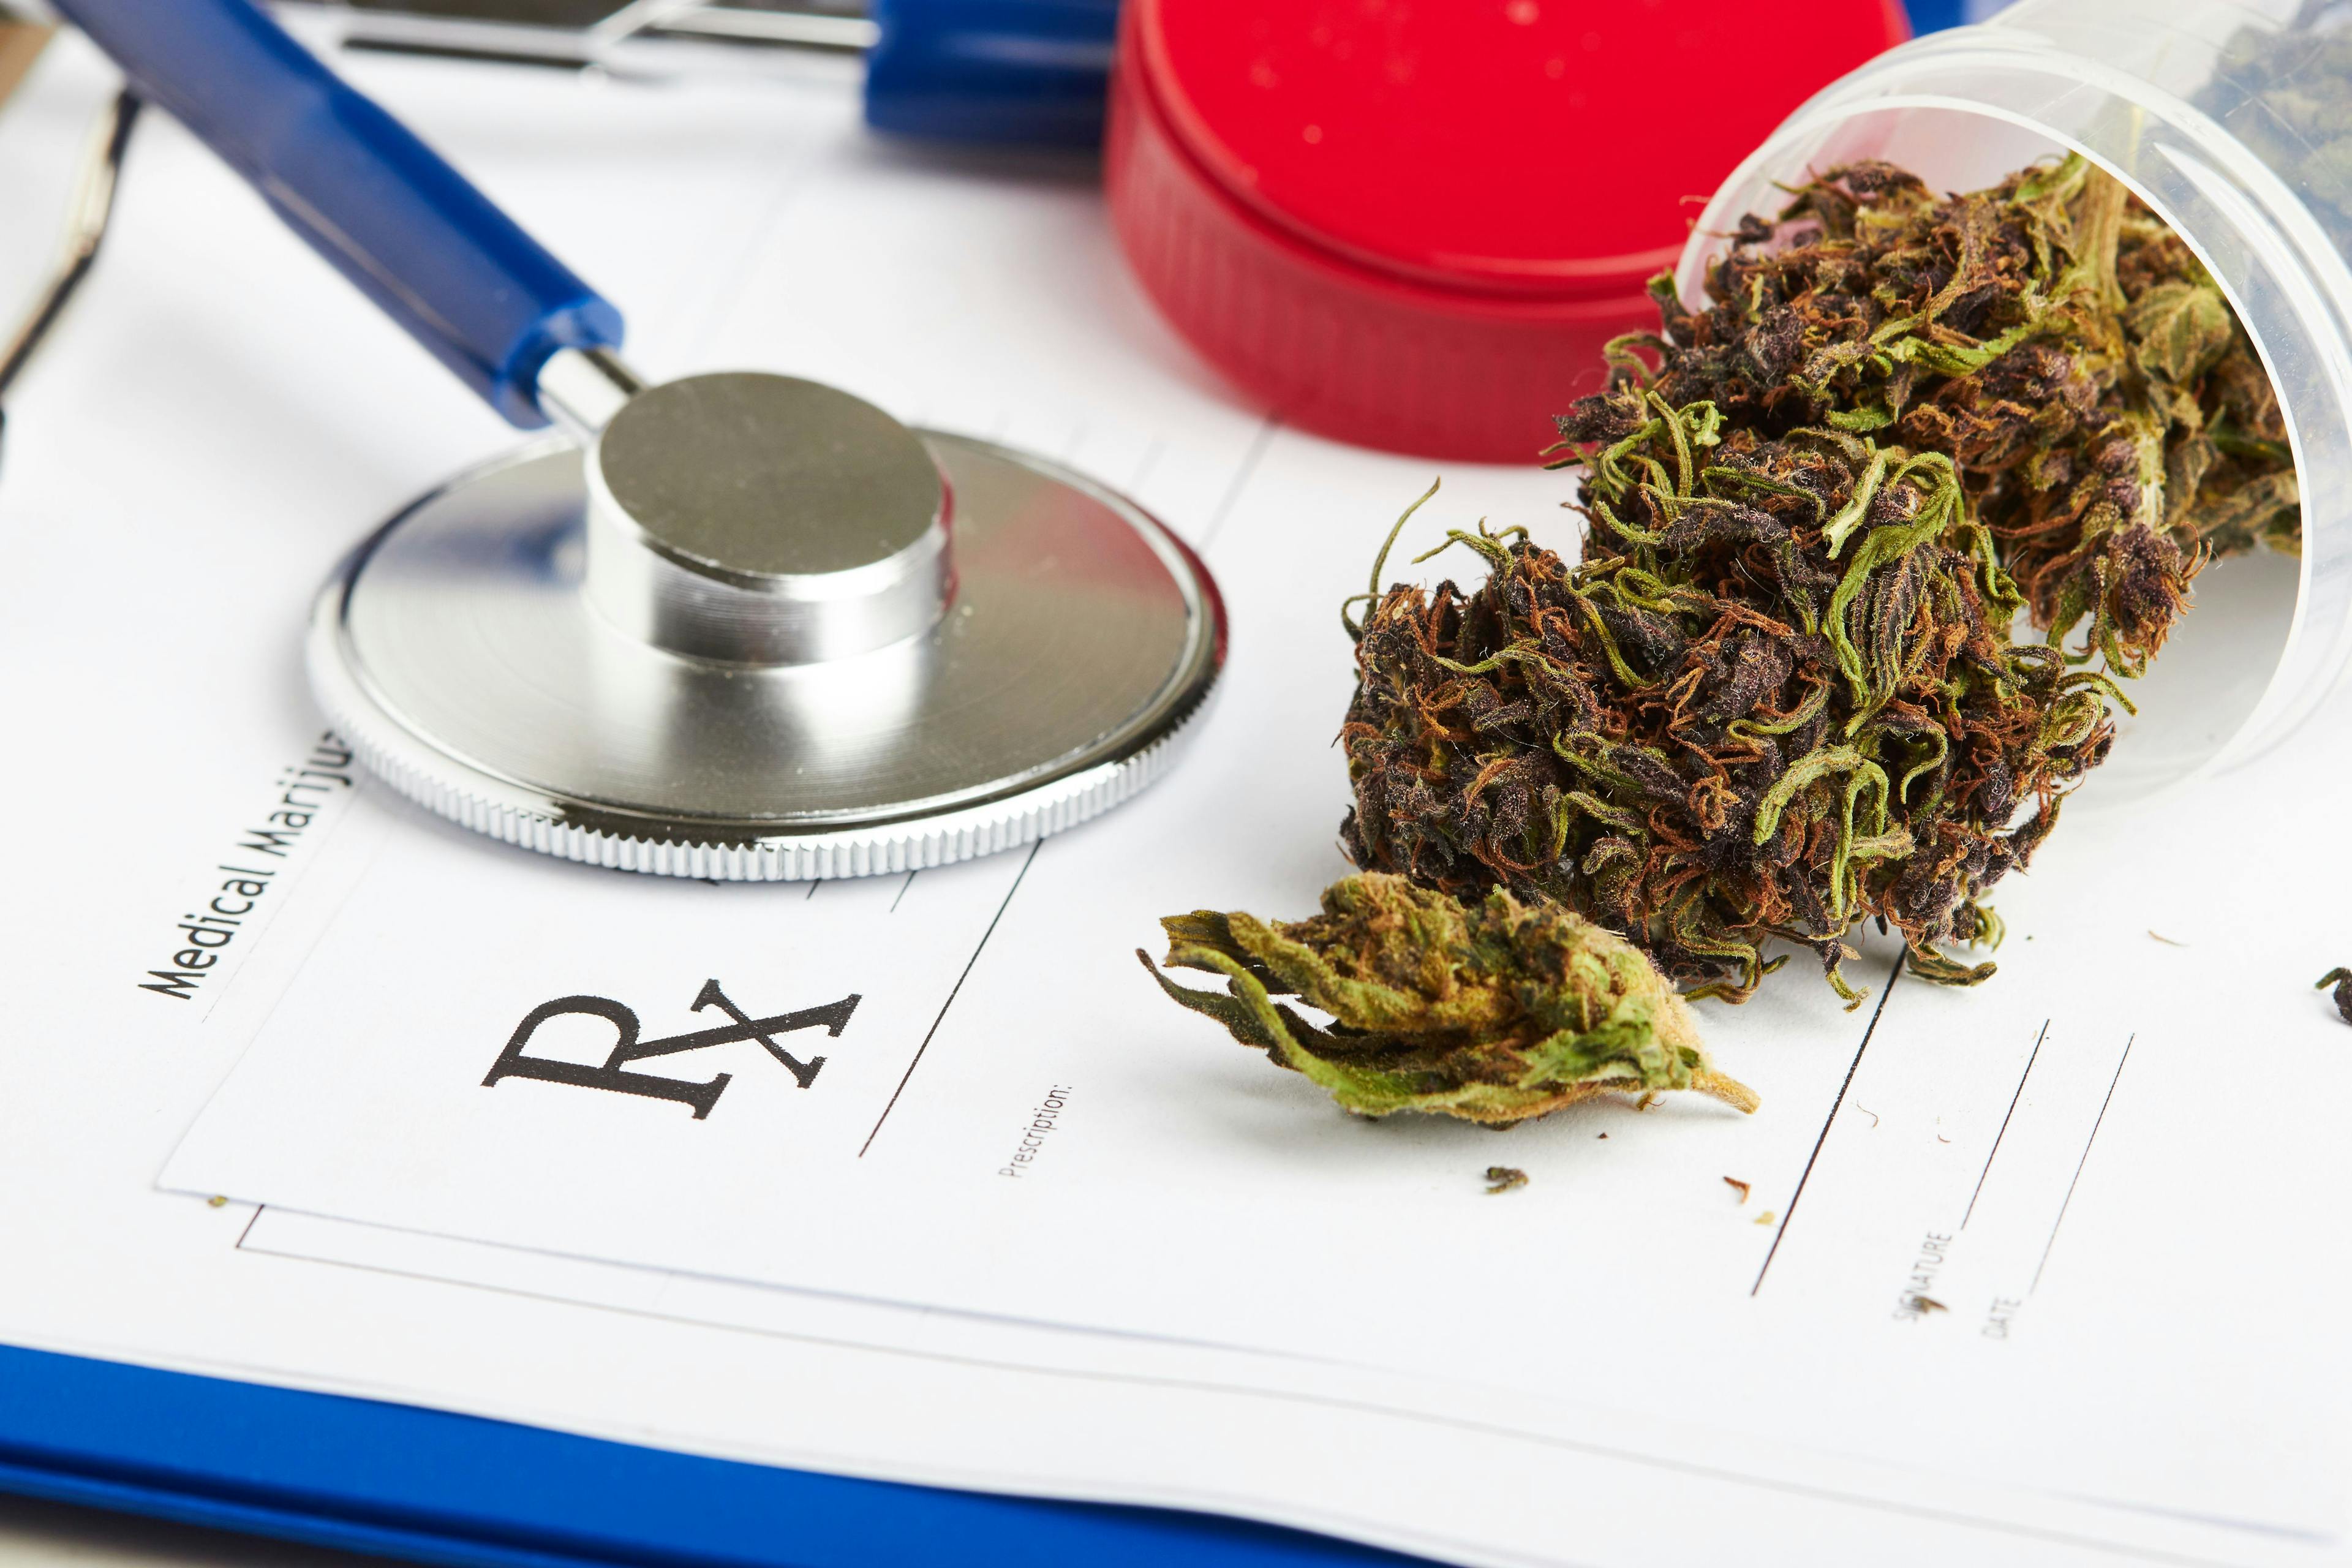 Precautions for Medical Cannabis in Rheumatology